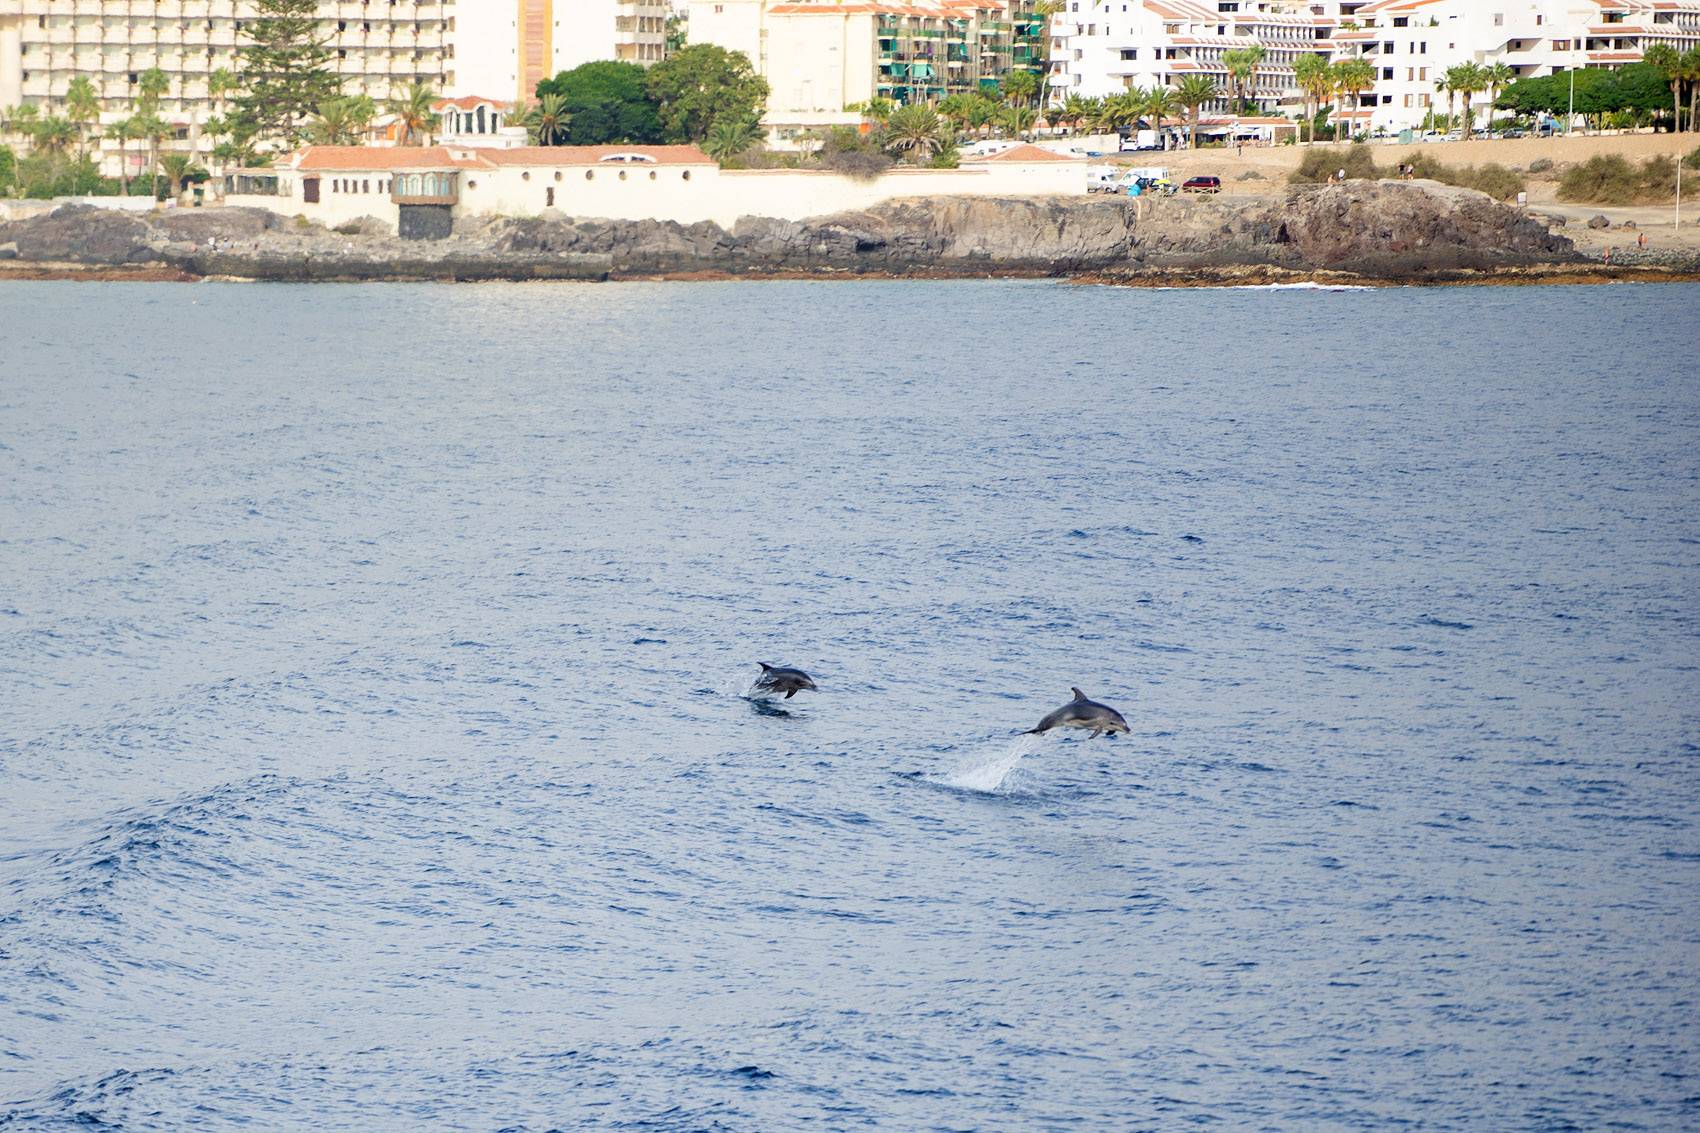 Dolphins saying goodbye